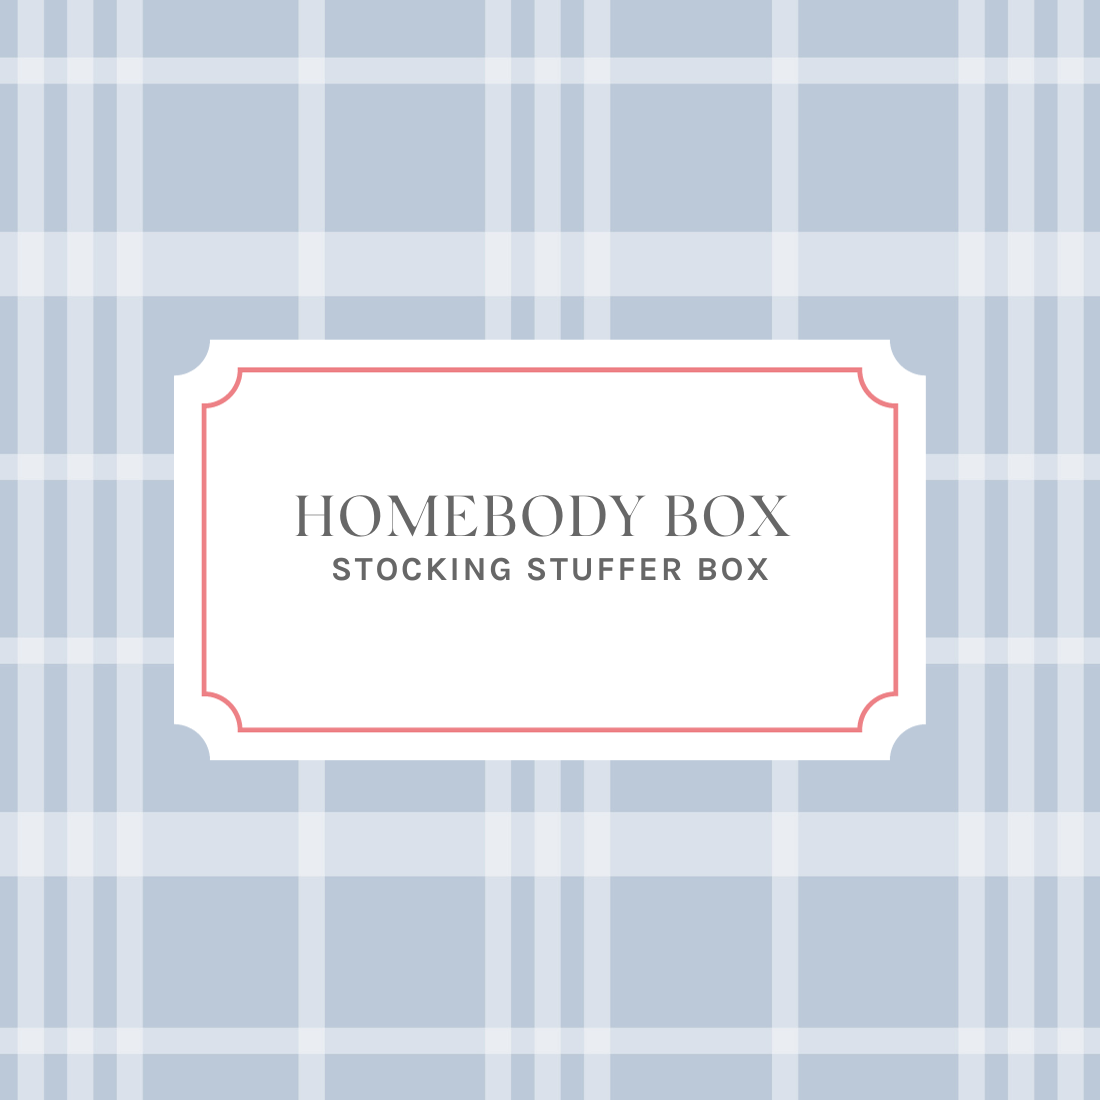 The Homebody Box